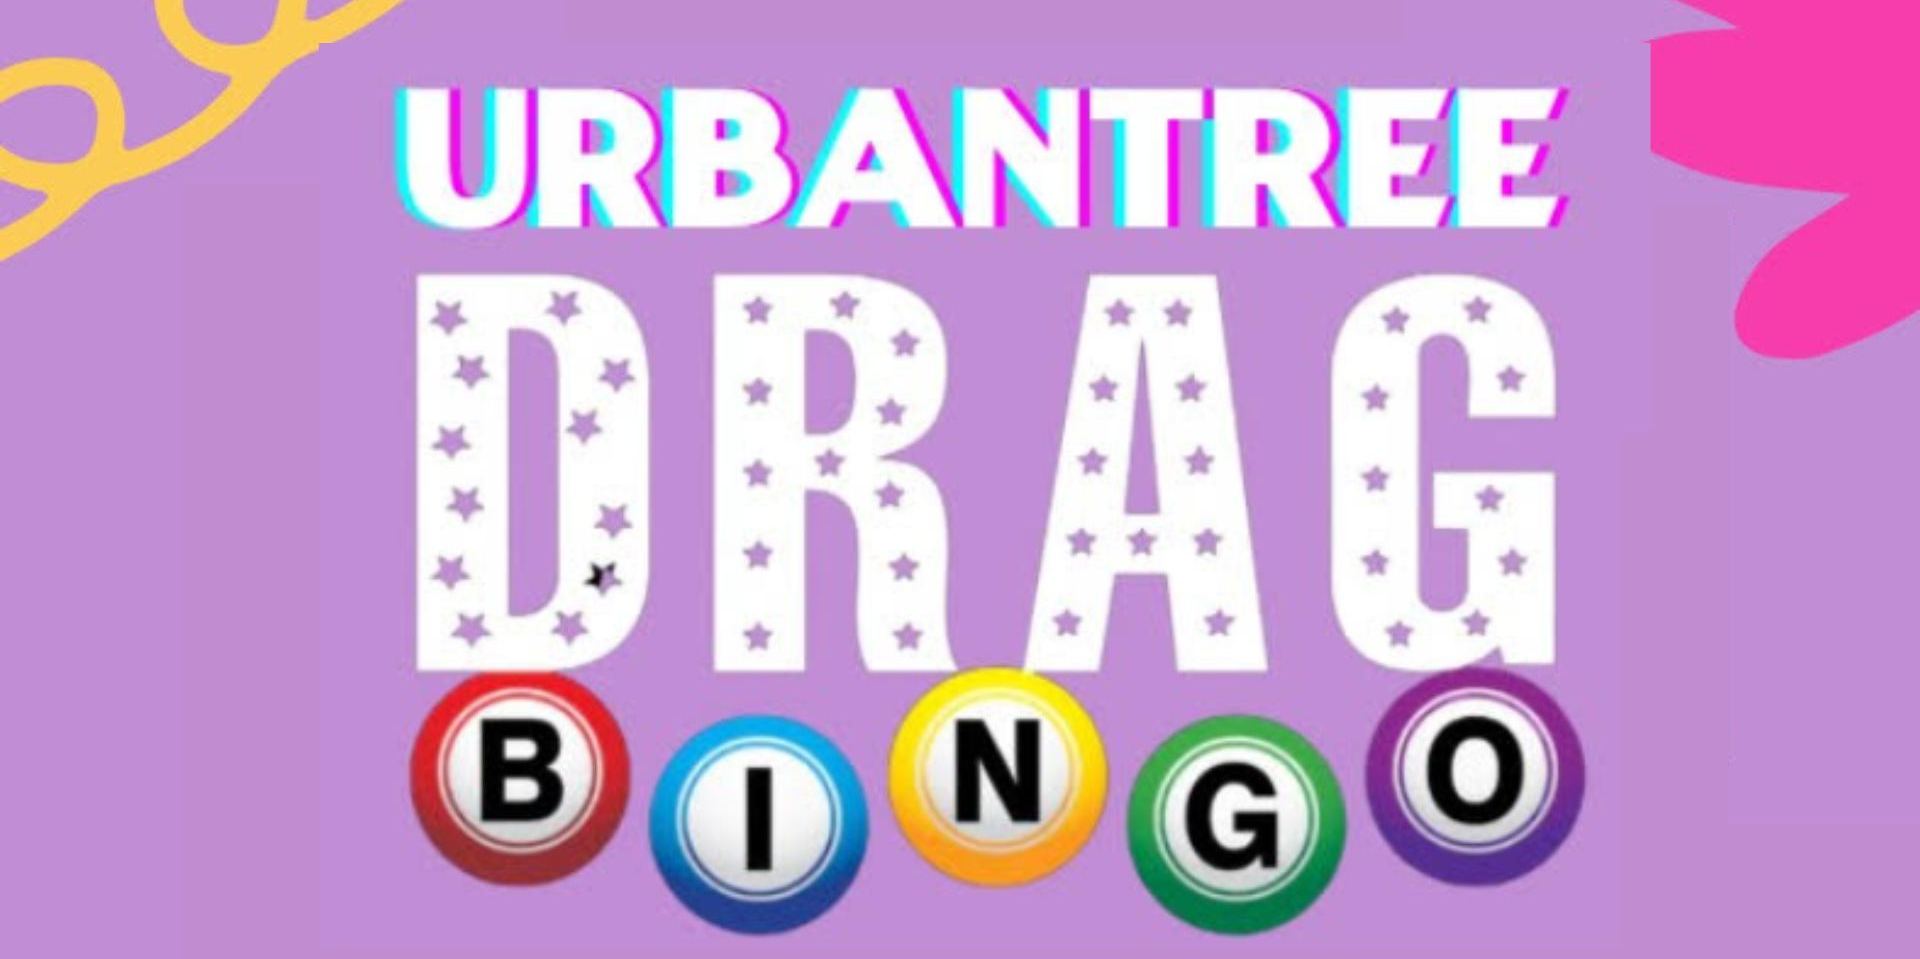 Drag Bingo! At UrbanTree Cidery benefiting AllStripes team @ AIDS Walk Atlanta promotional image